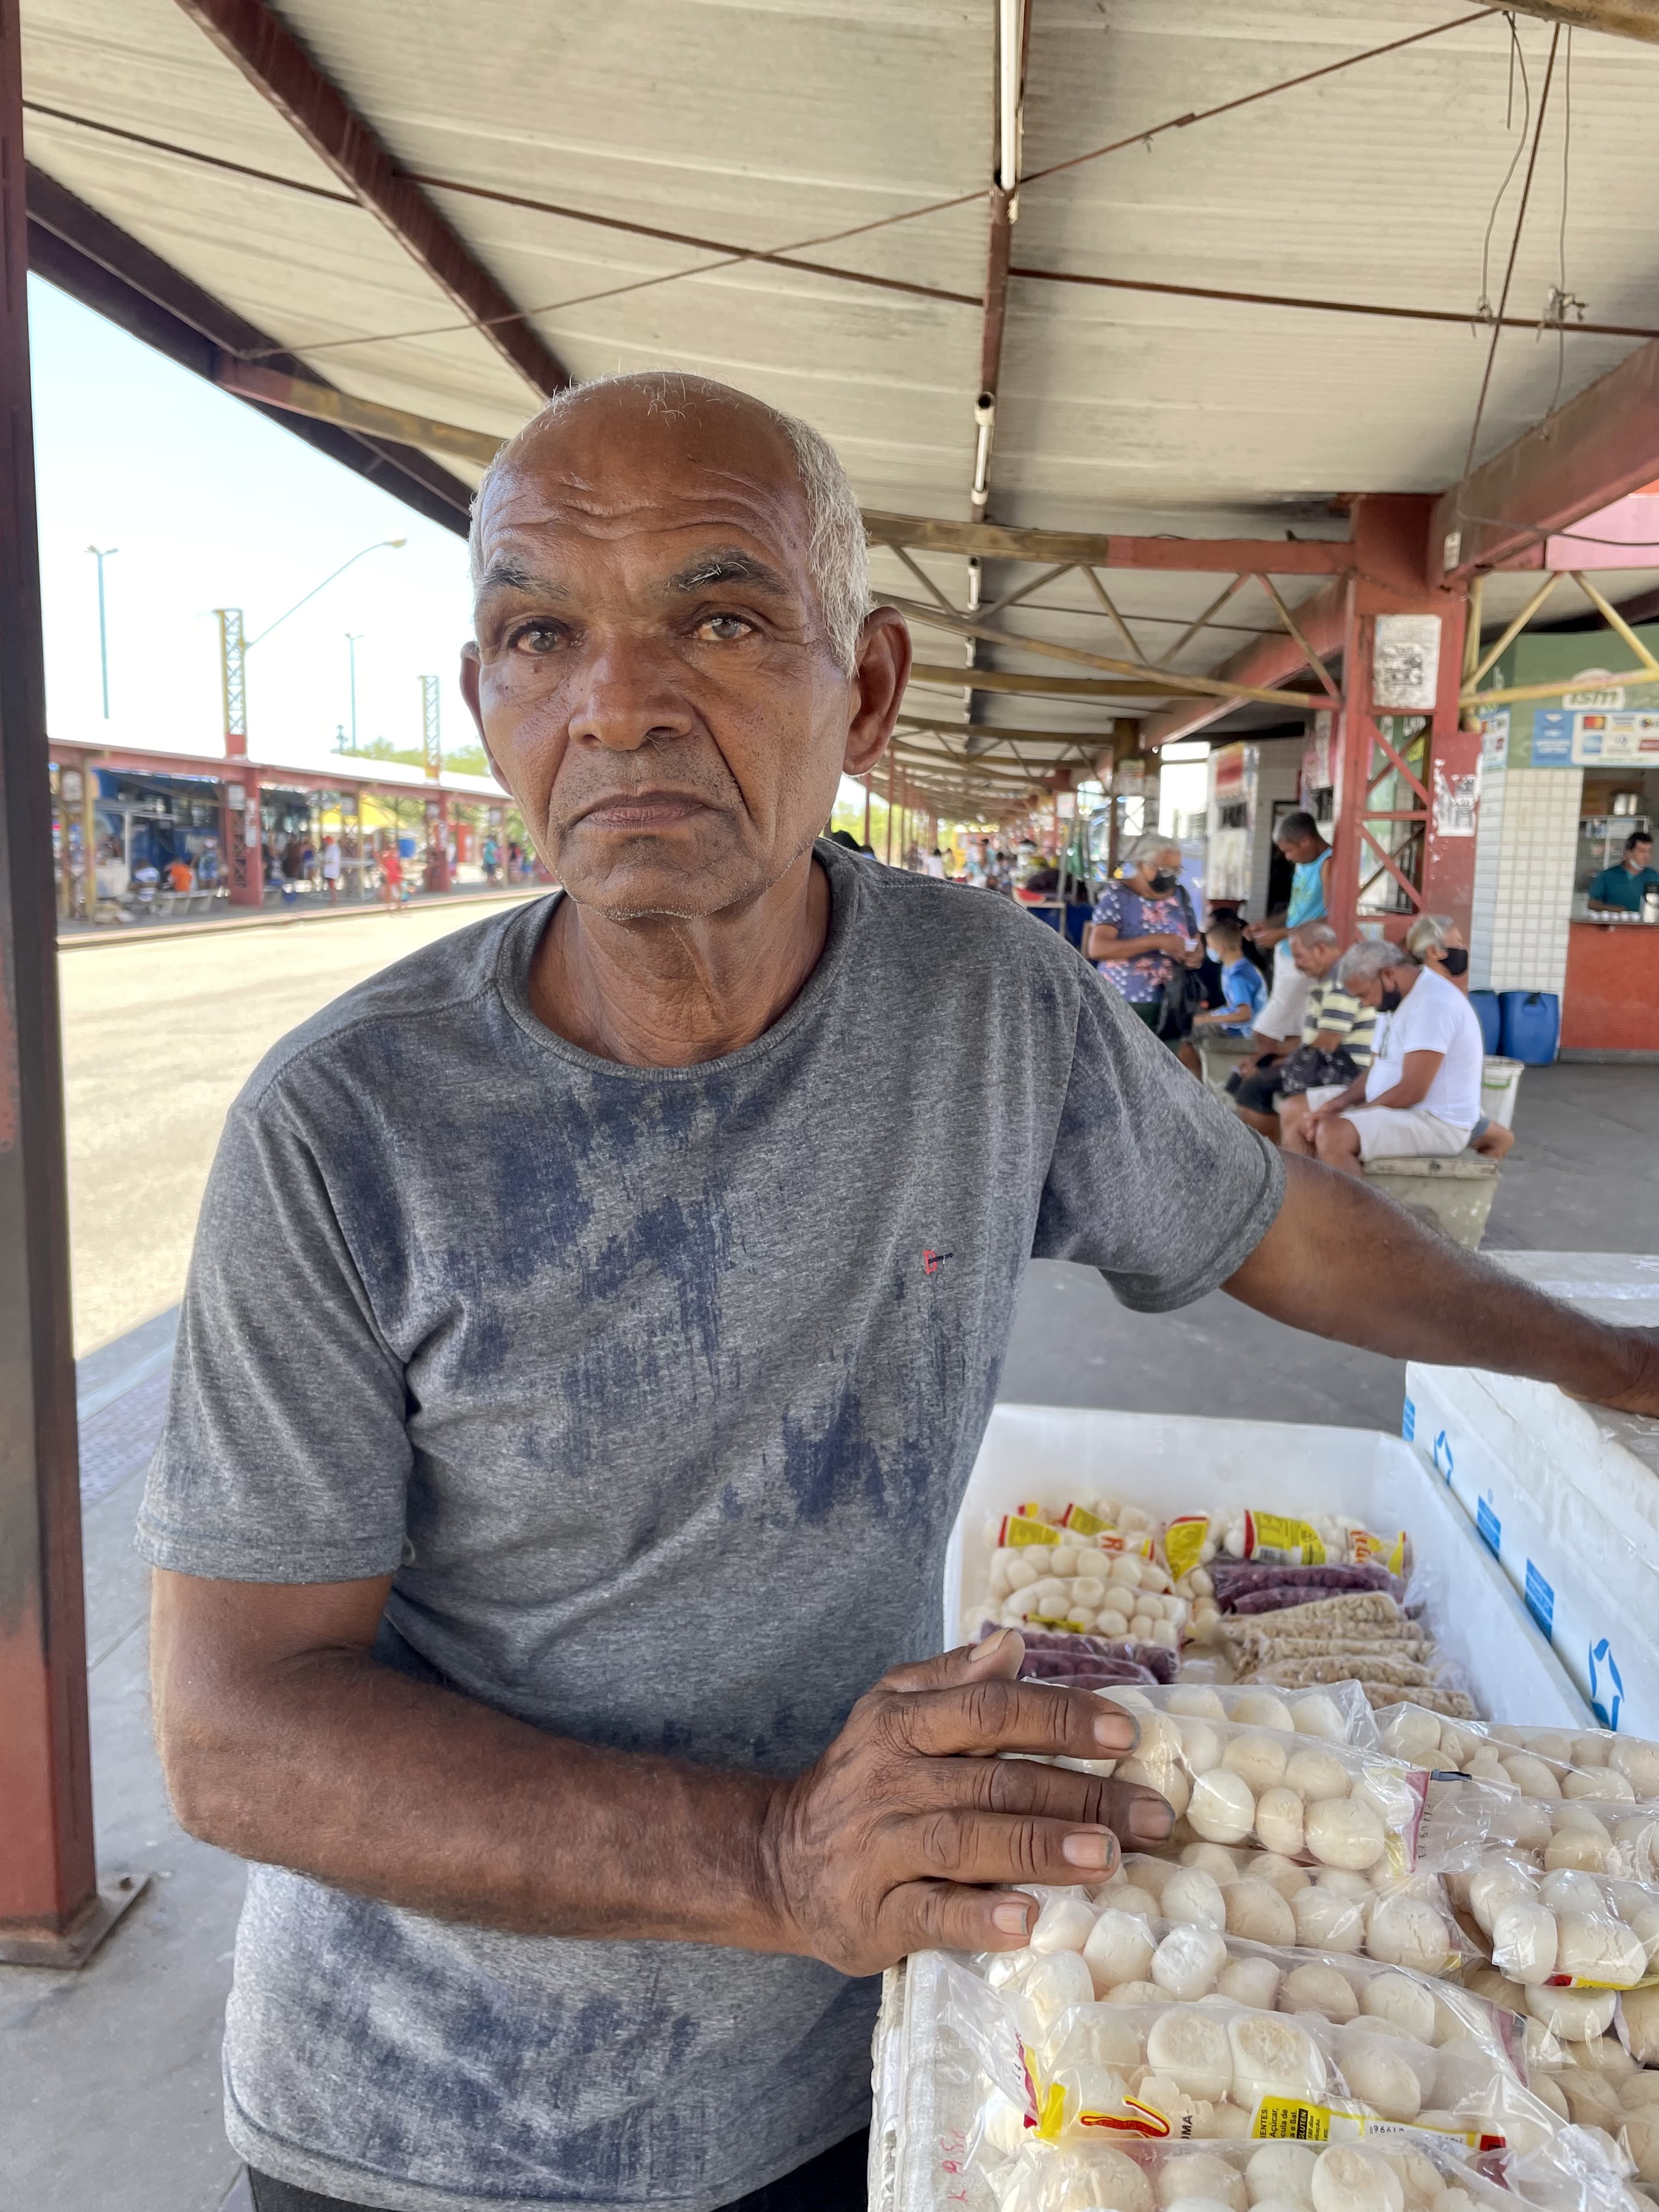 Antônio Rodrigues tira o sustento vendendo doces no terminal da Zona Oeste. Foto: PVS